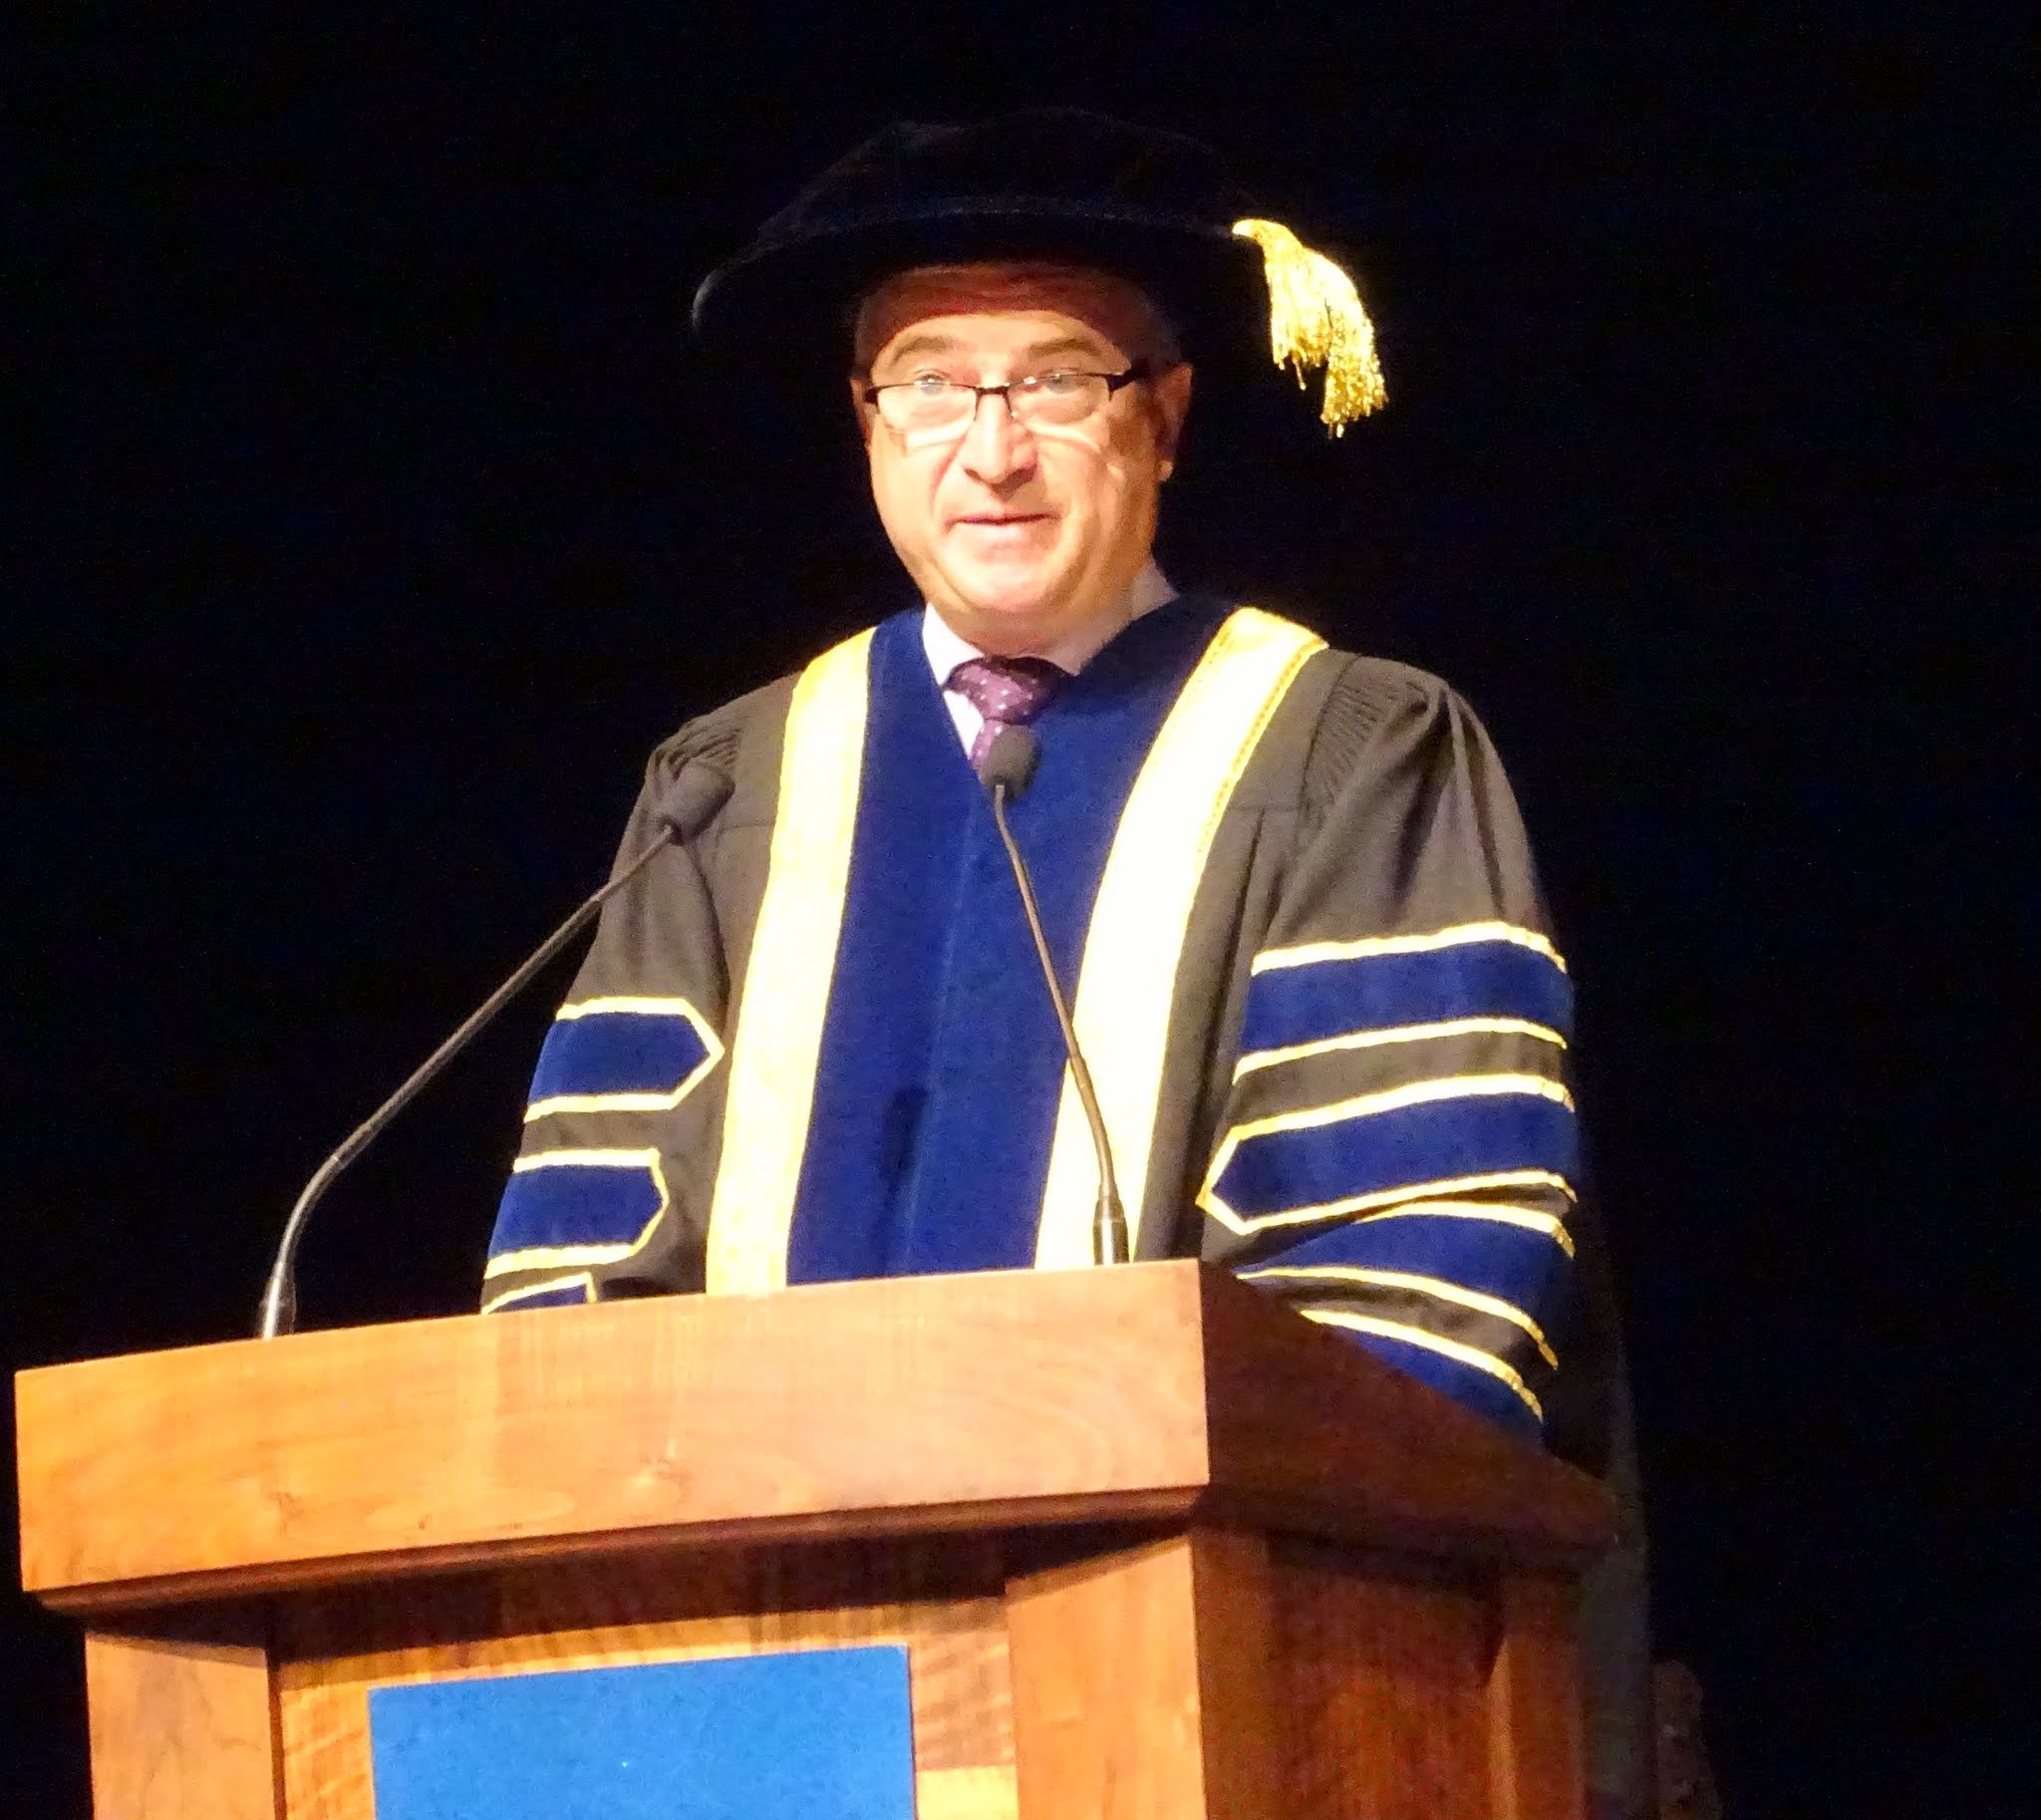 Introduction of Chancellor by Dr. Jeff Zabudsky